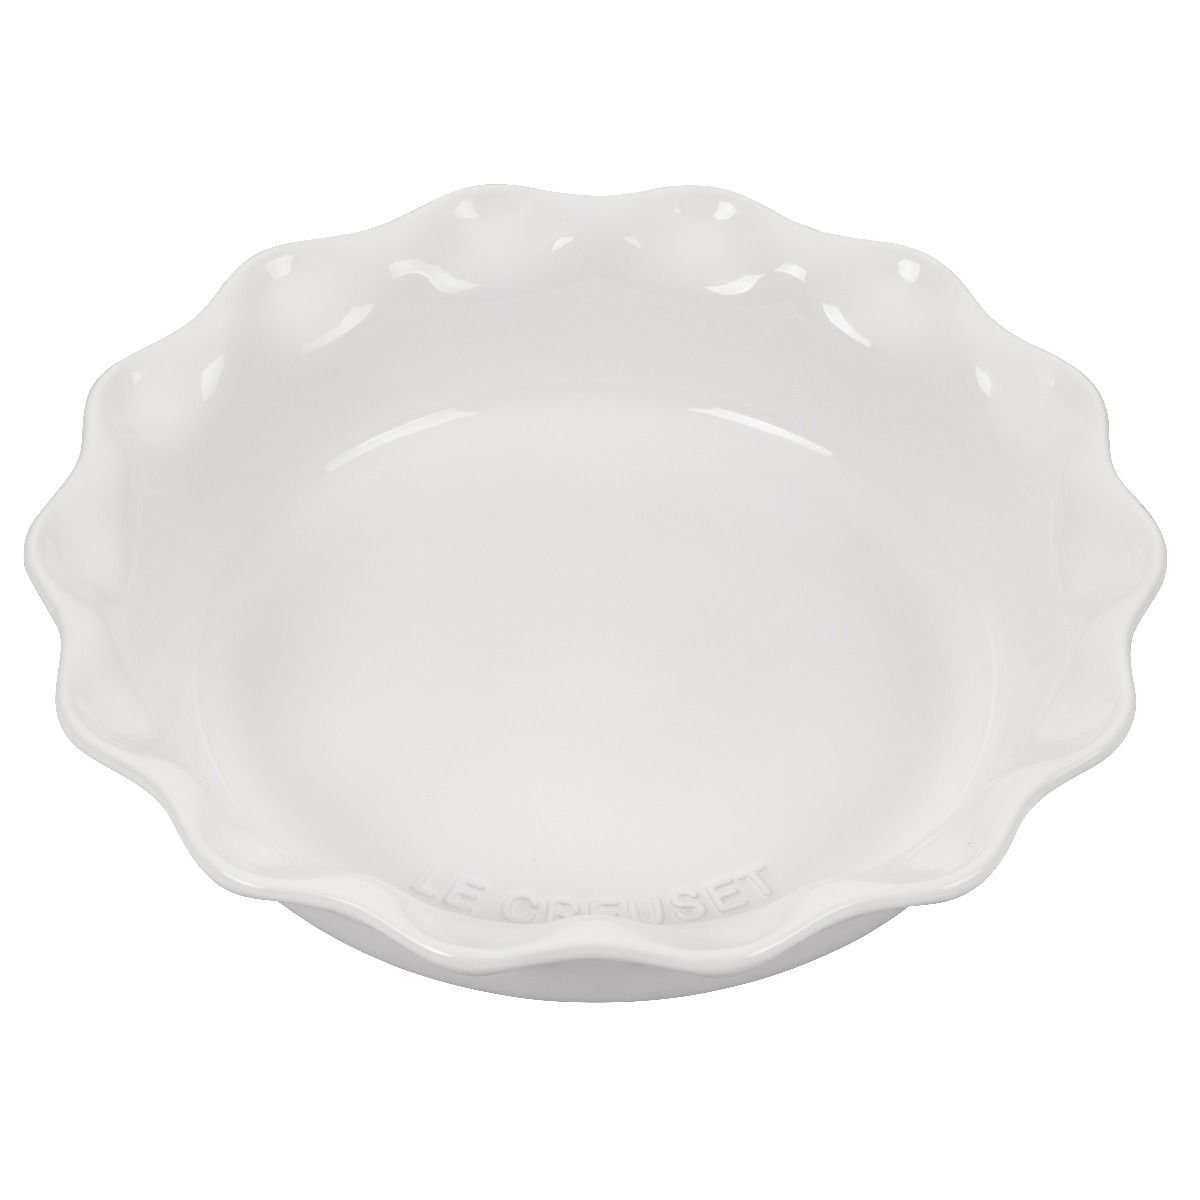  Le Creuset Stoneware 9 Heritage Pie Dish, White: Home & Kitchen